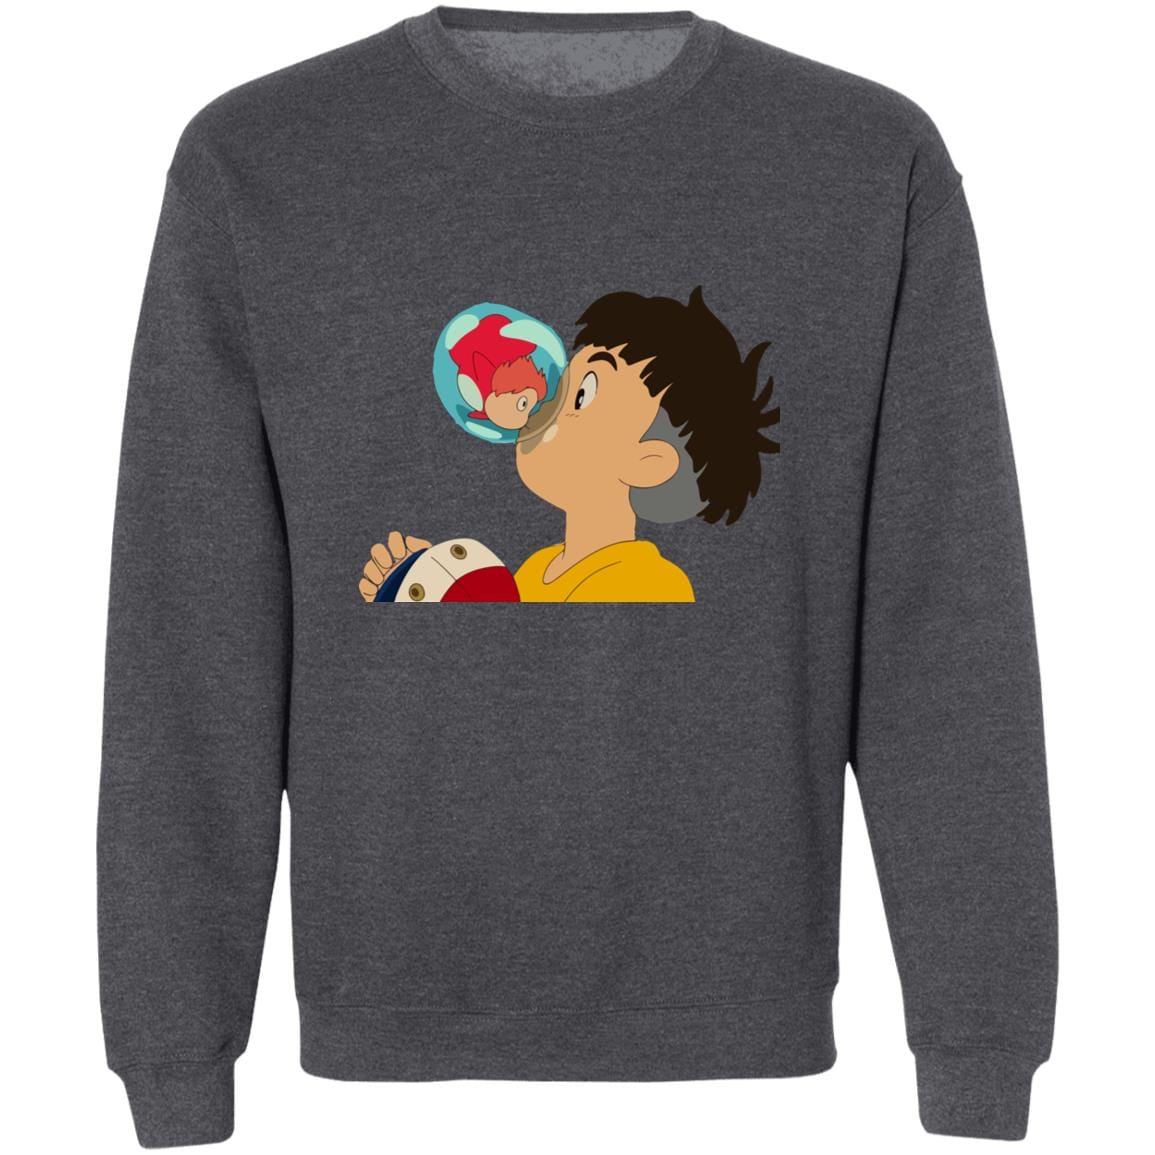 Ponyo The Kiss Sweatshirt